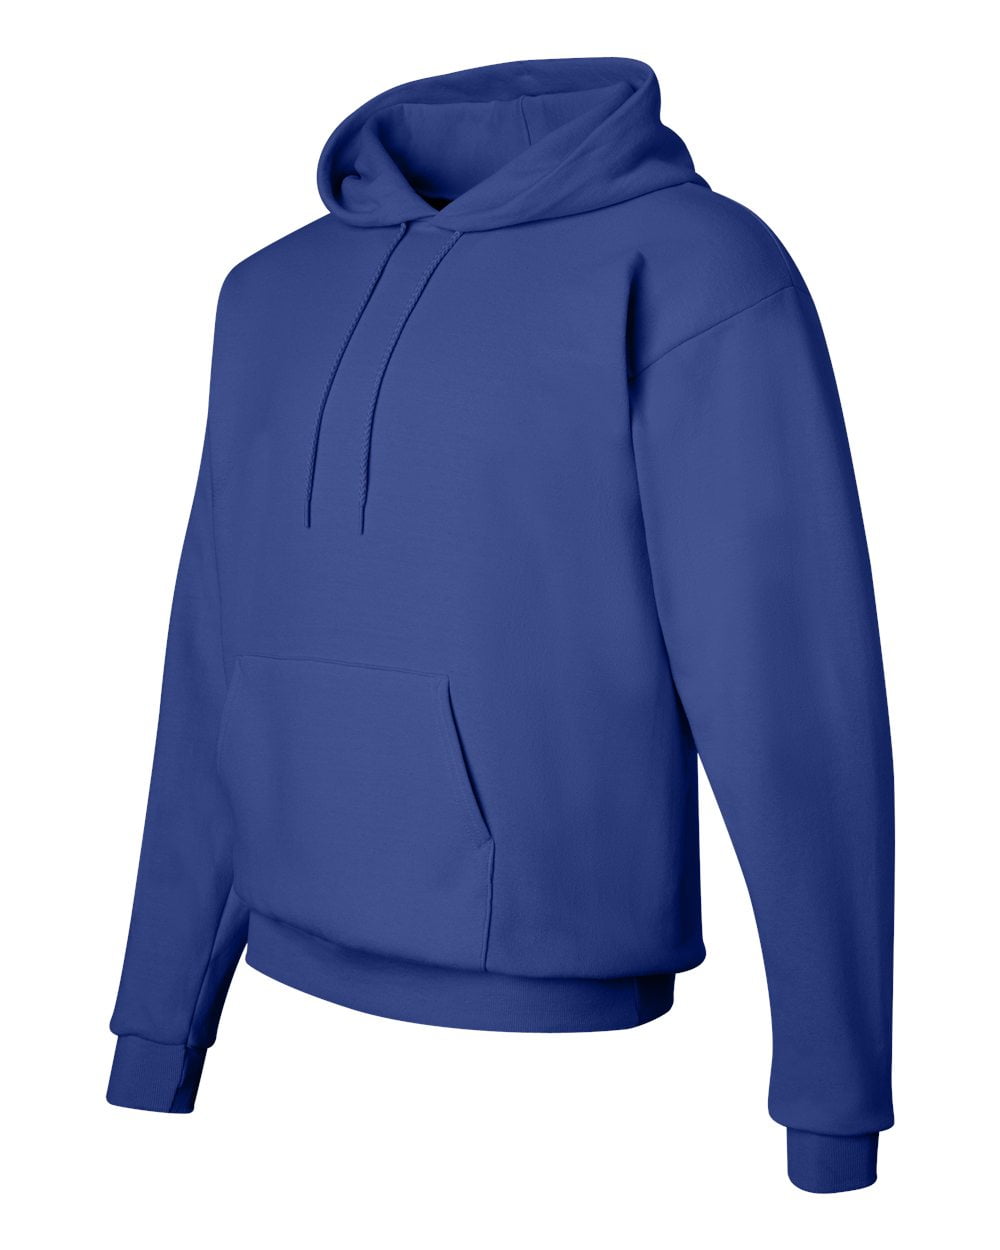 Hanes - Ecosmart Hooded Sweatshirt 50/50 - Walmart.com